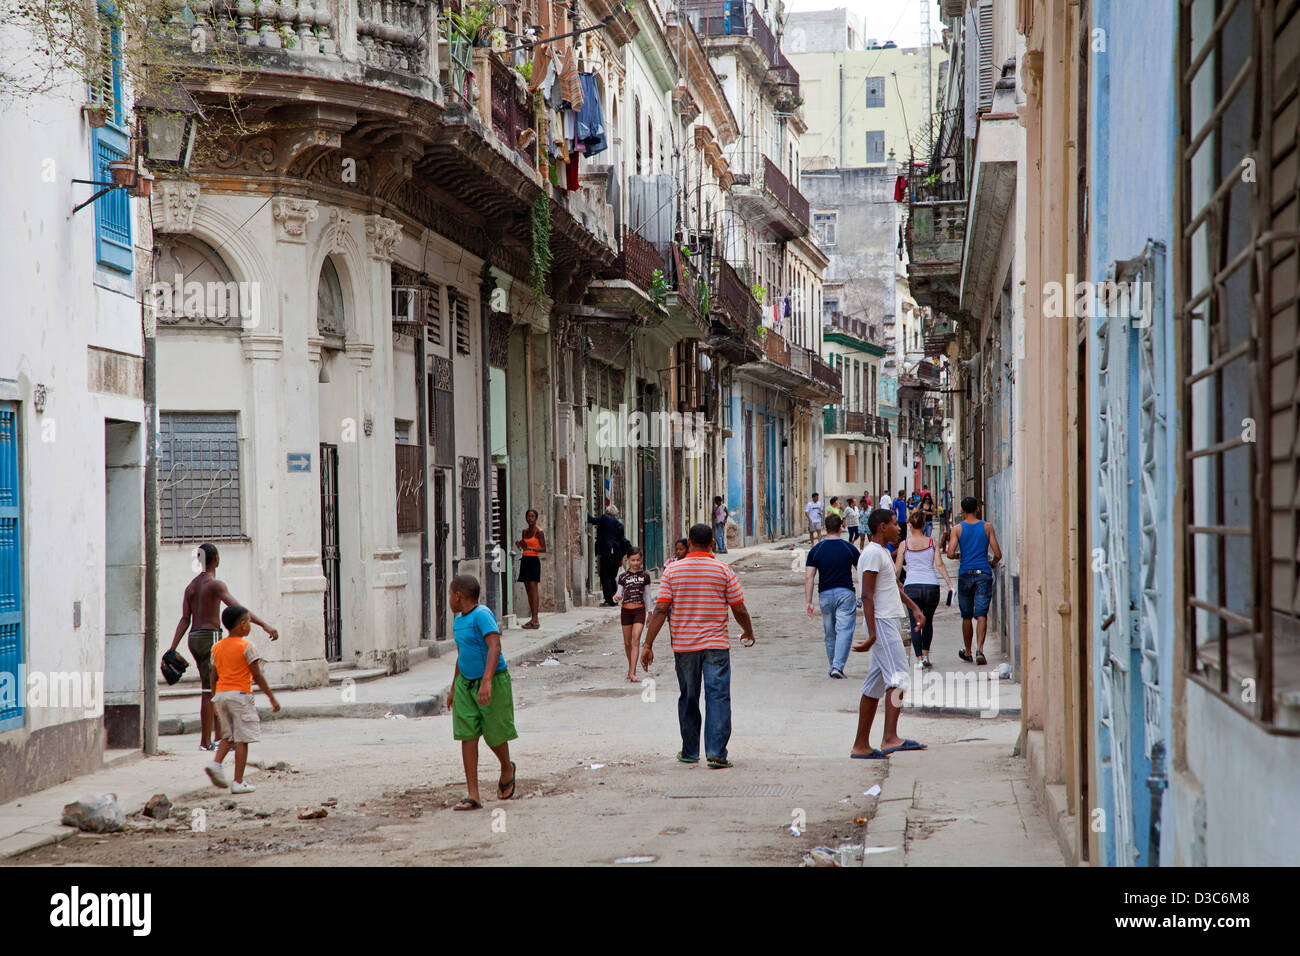 Jugendliche in verfallene Straße in Alt-Havanna / La Habana Vieja, Kuba, Caribbean Stockfoto